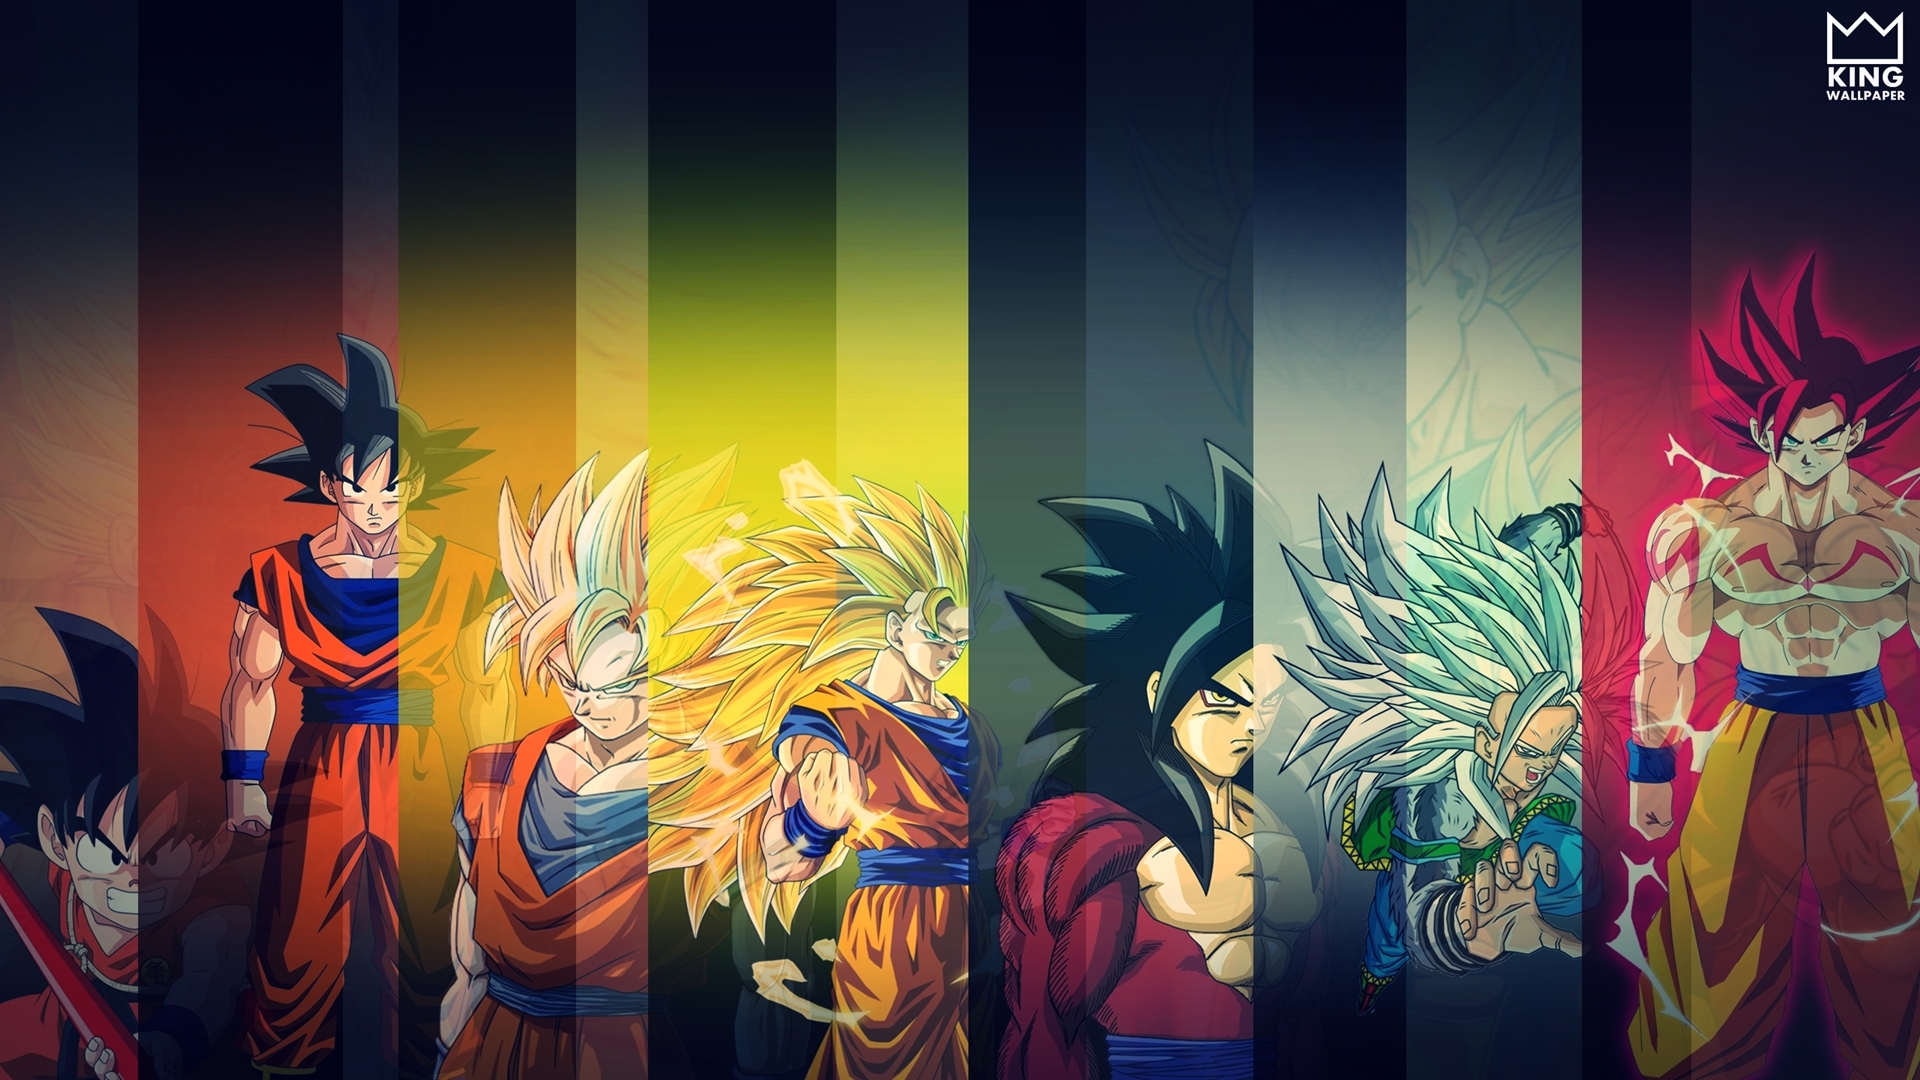  Best Goku Wallpaper hd for PC Dragon Ball Z